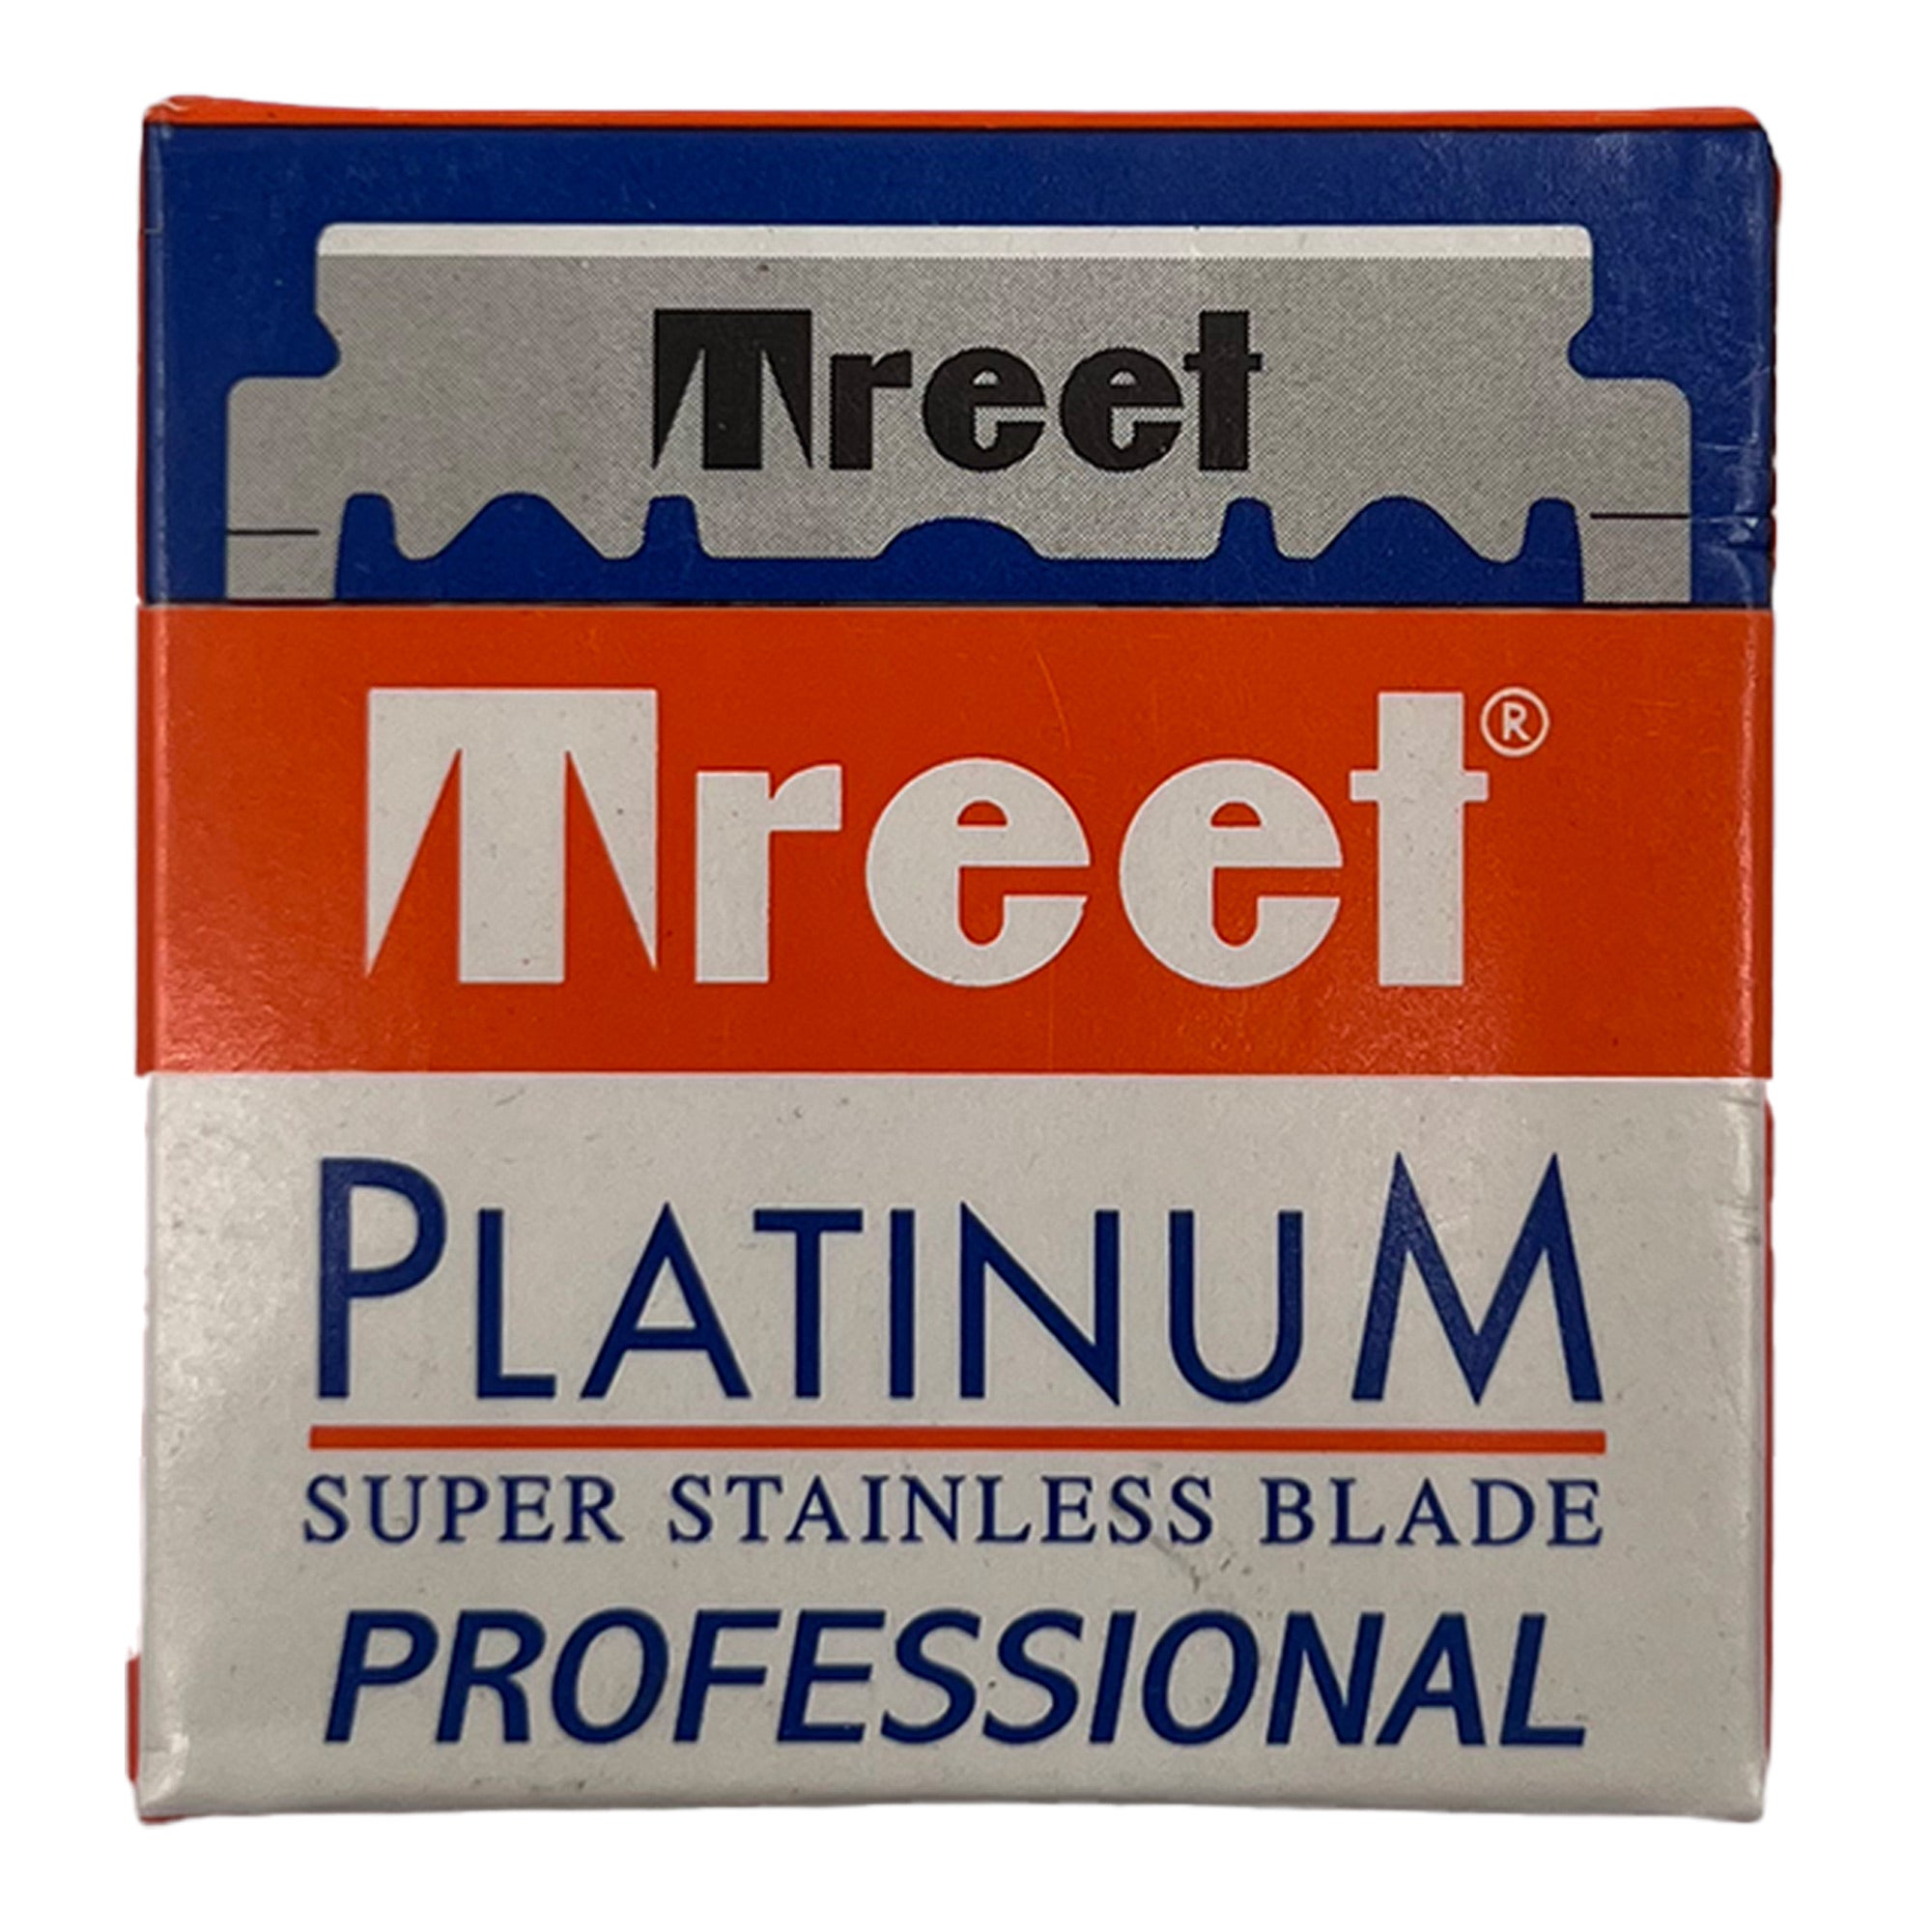 Treet - Platinum Single Edge Razor Blades (100pcs)